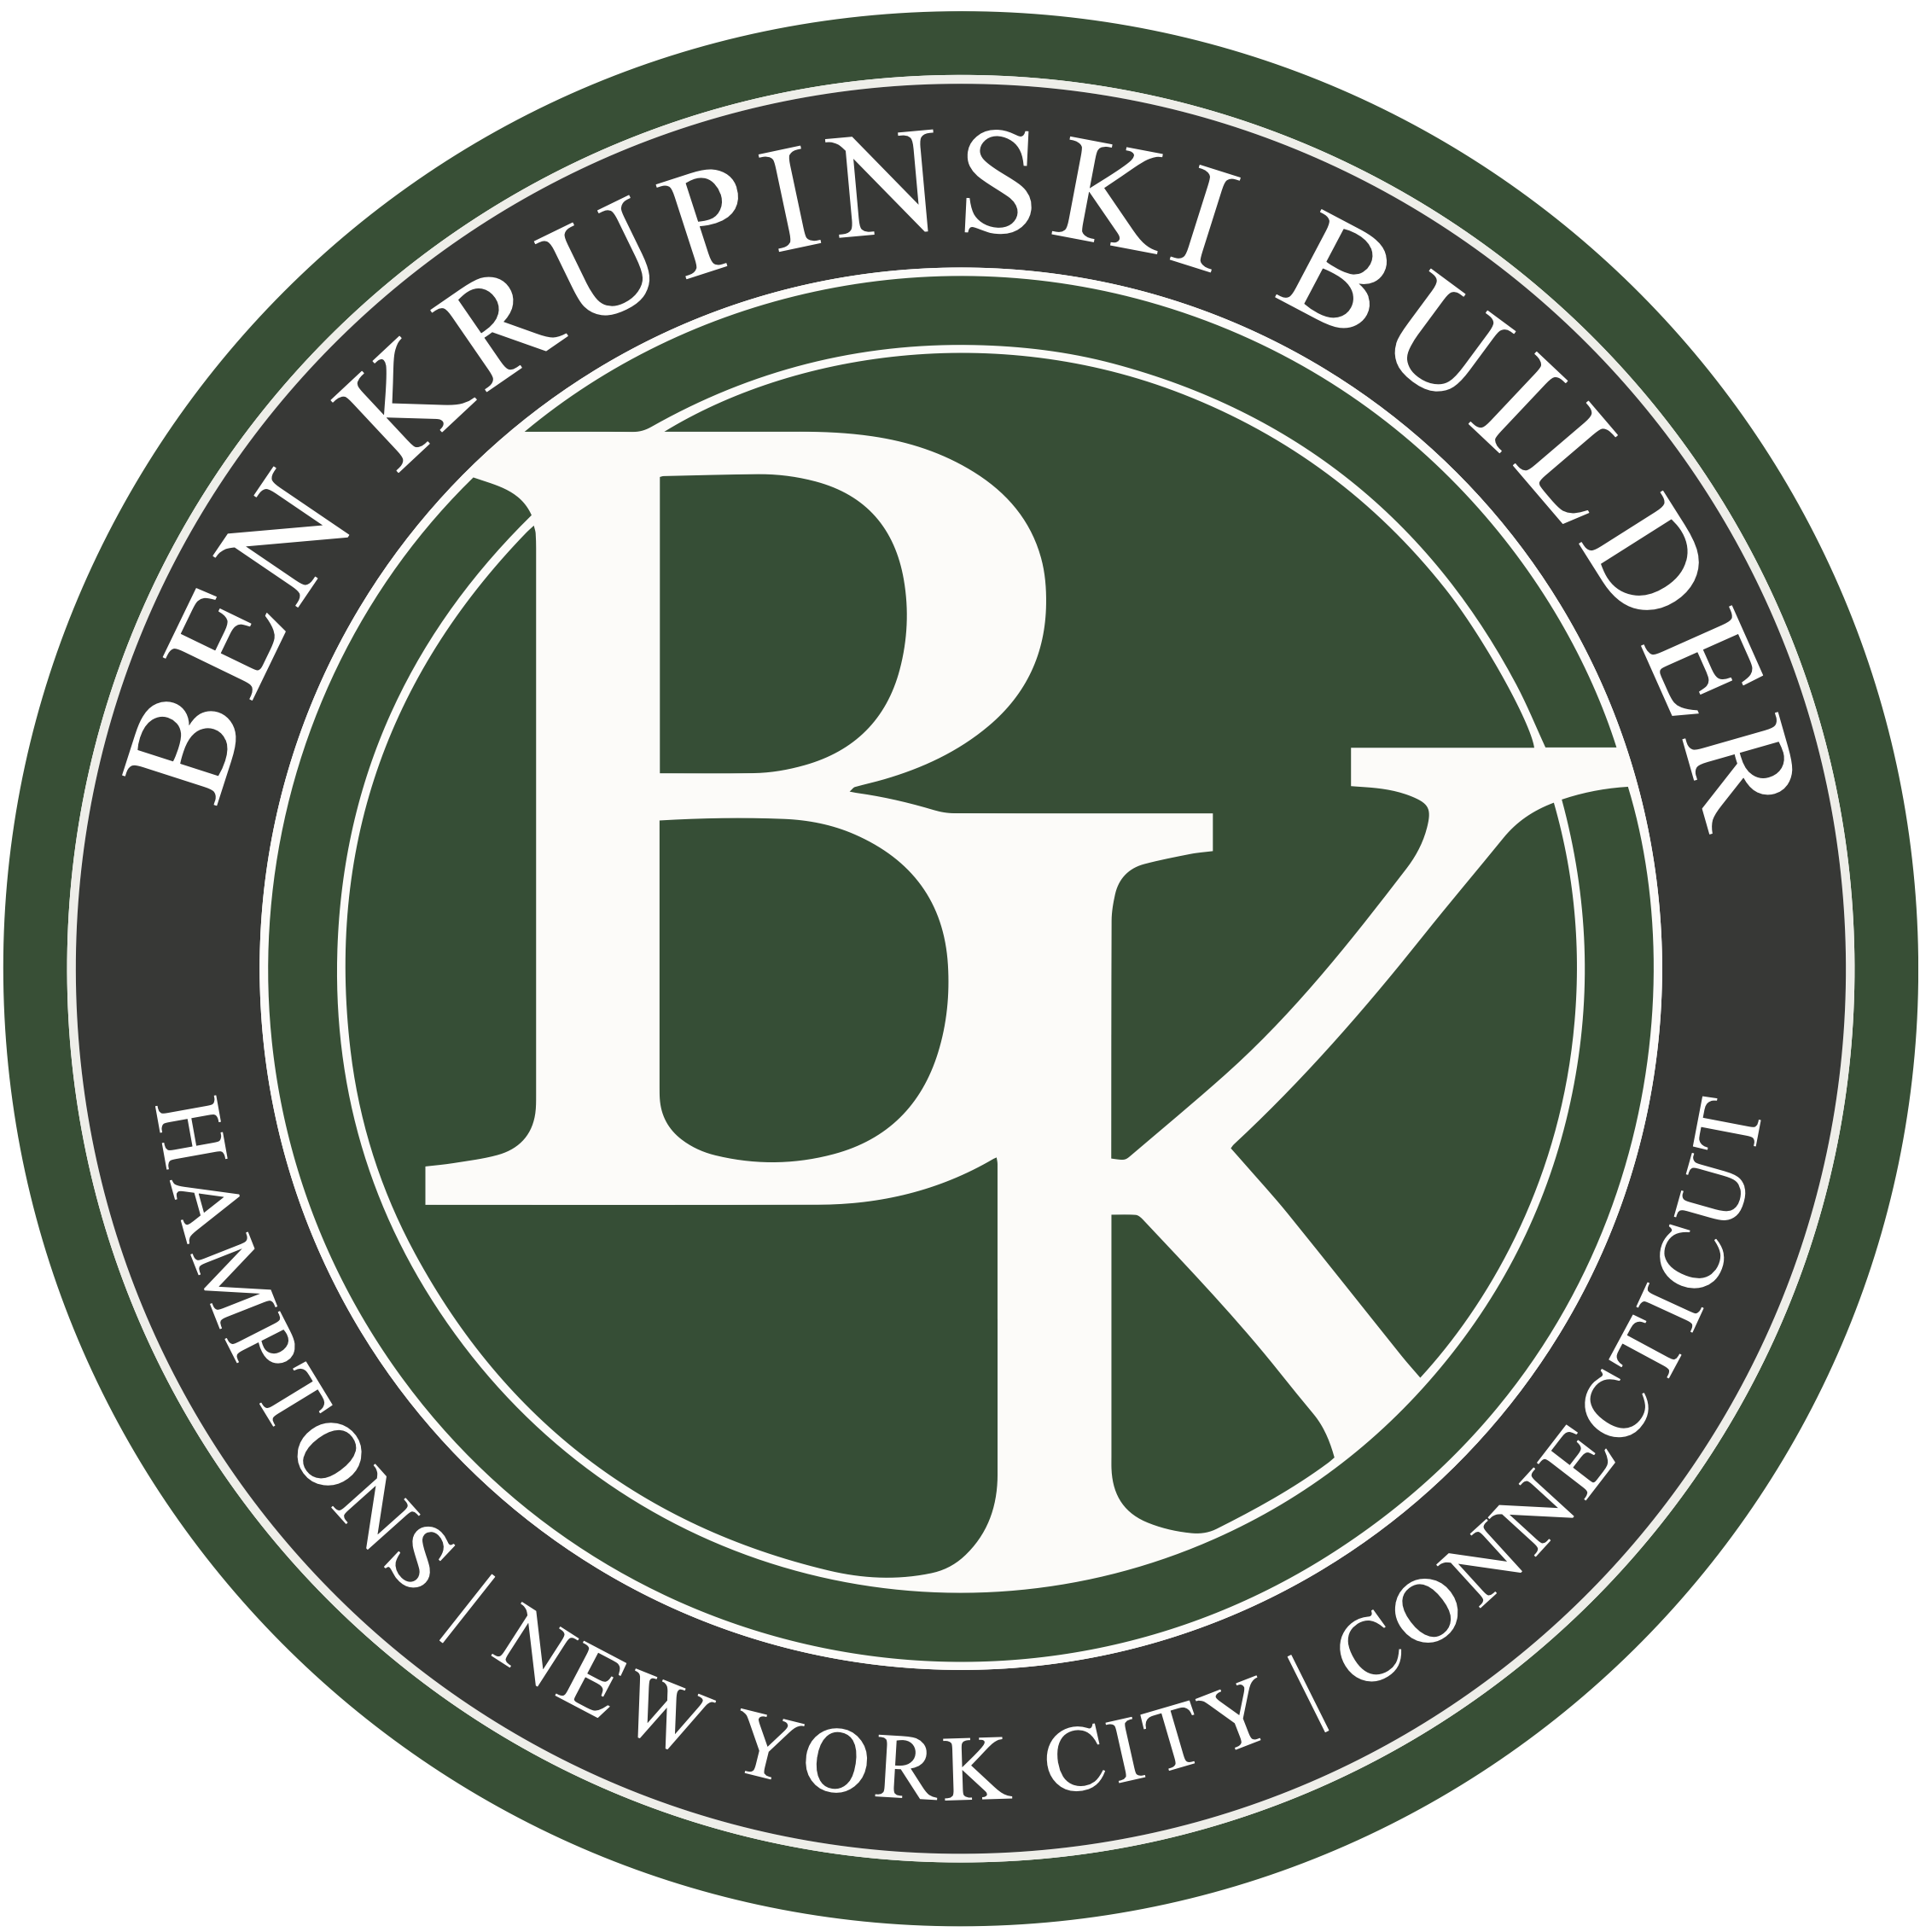 Ben Krupinski Builder